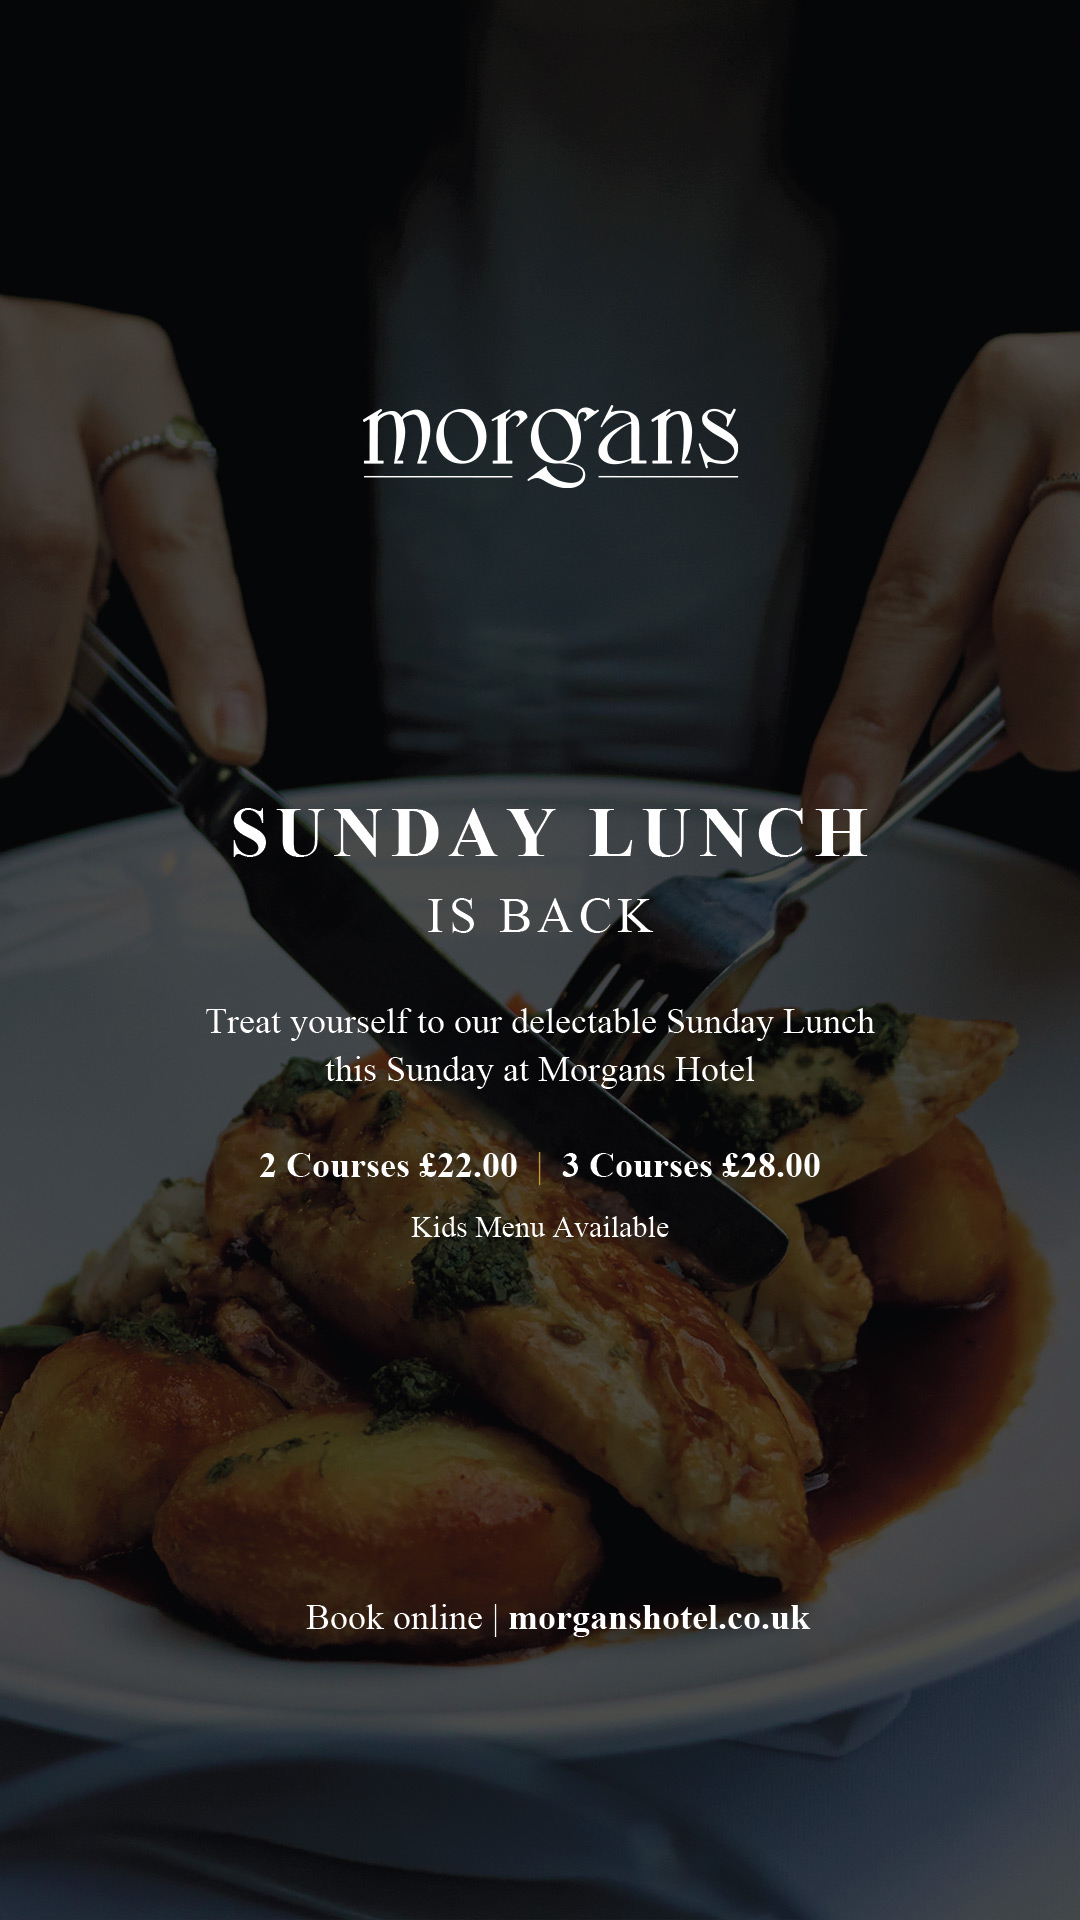 Morgans Hotel Sunday Lunch Advert